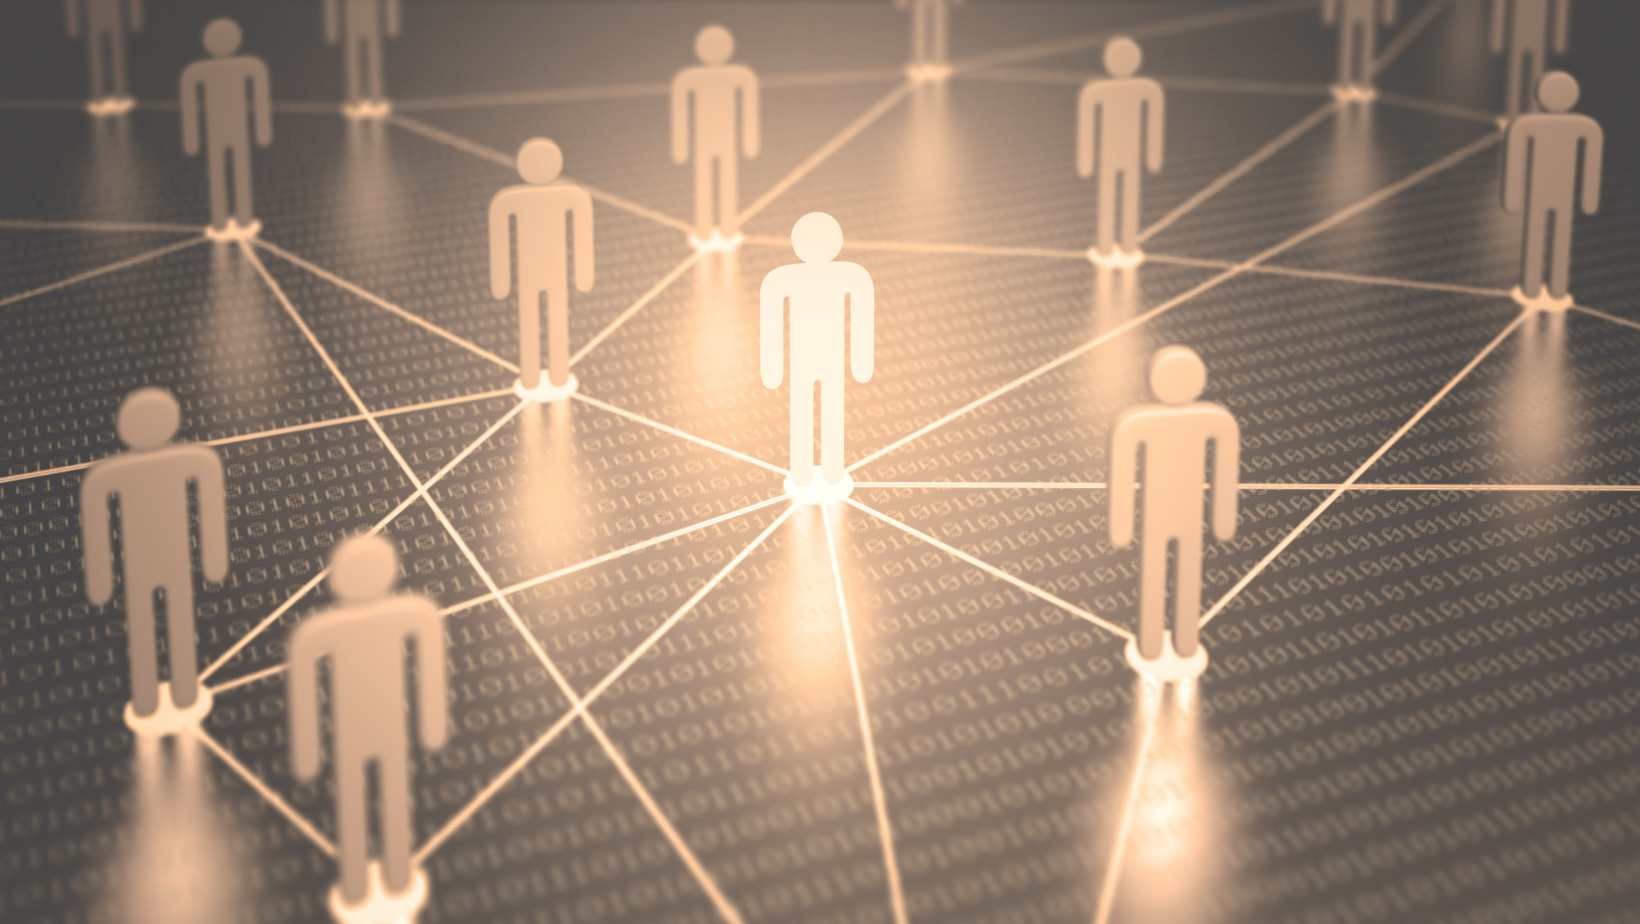 Digital artwork depicting networking 